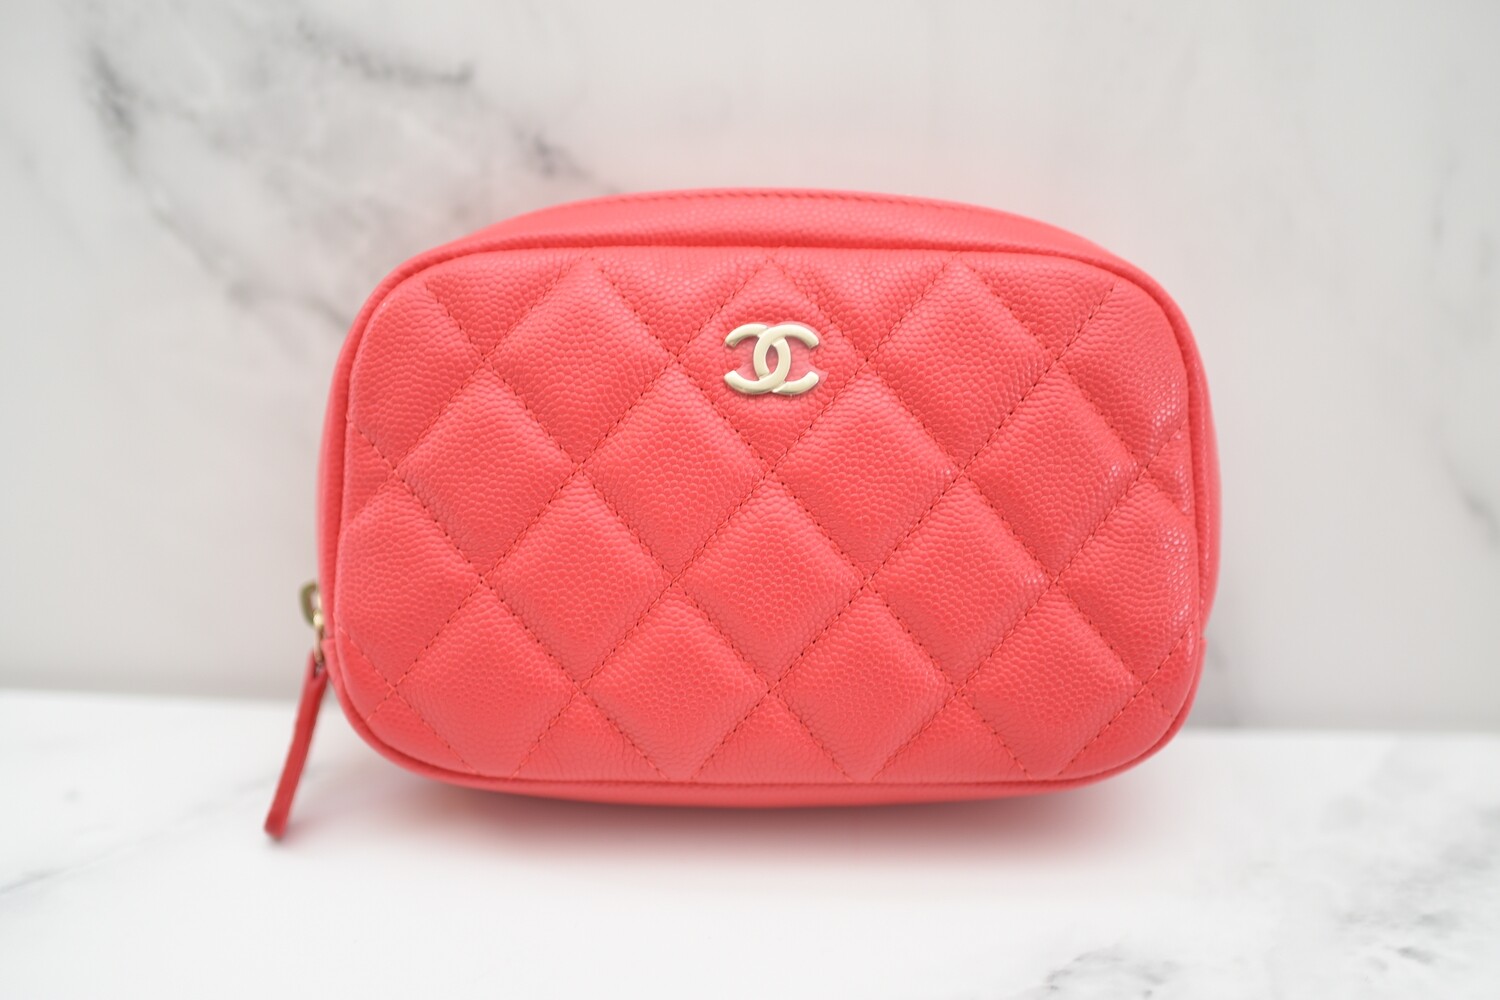 Chanel Small Curvy Cosmetic Case, Red Caviar, New in Box